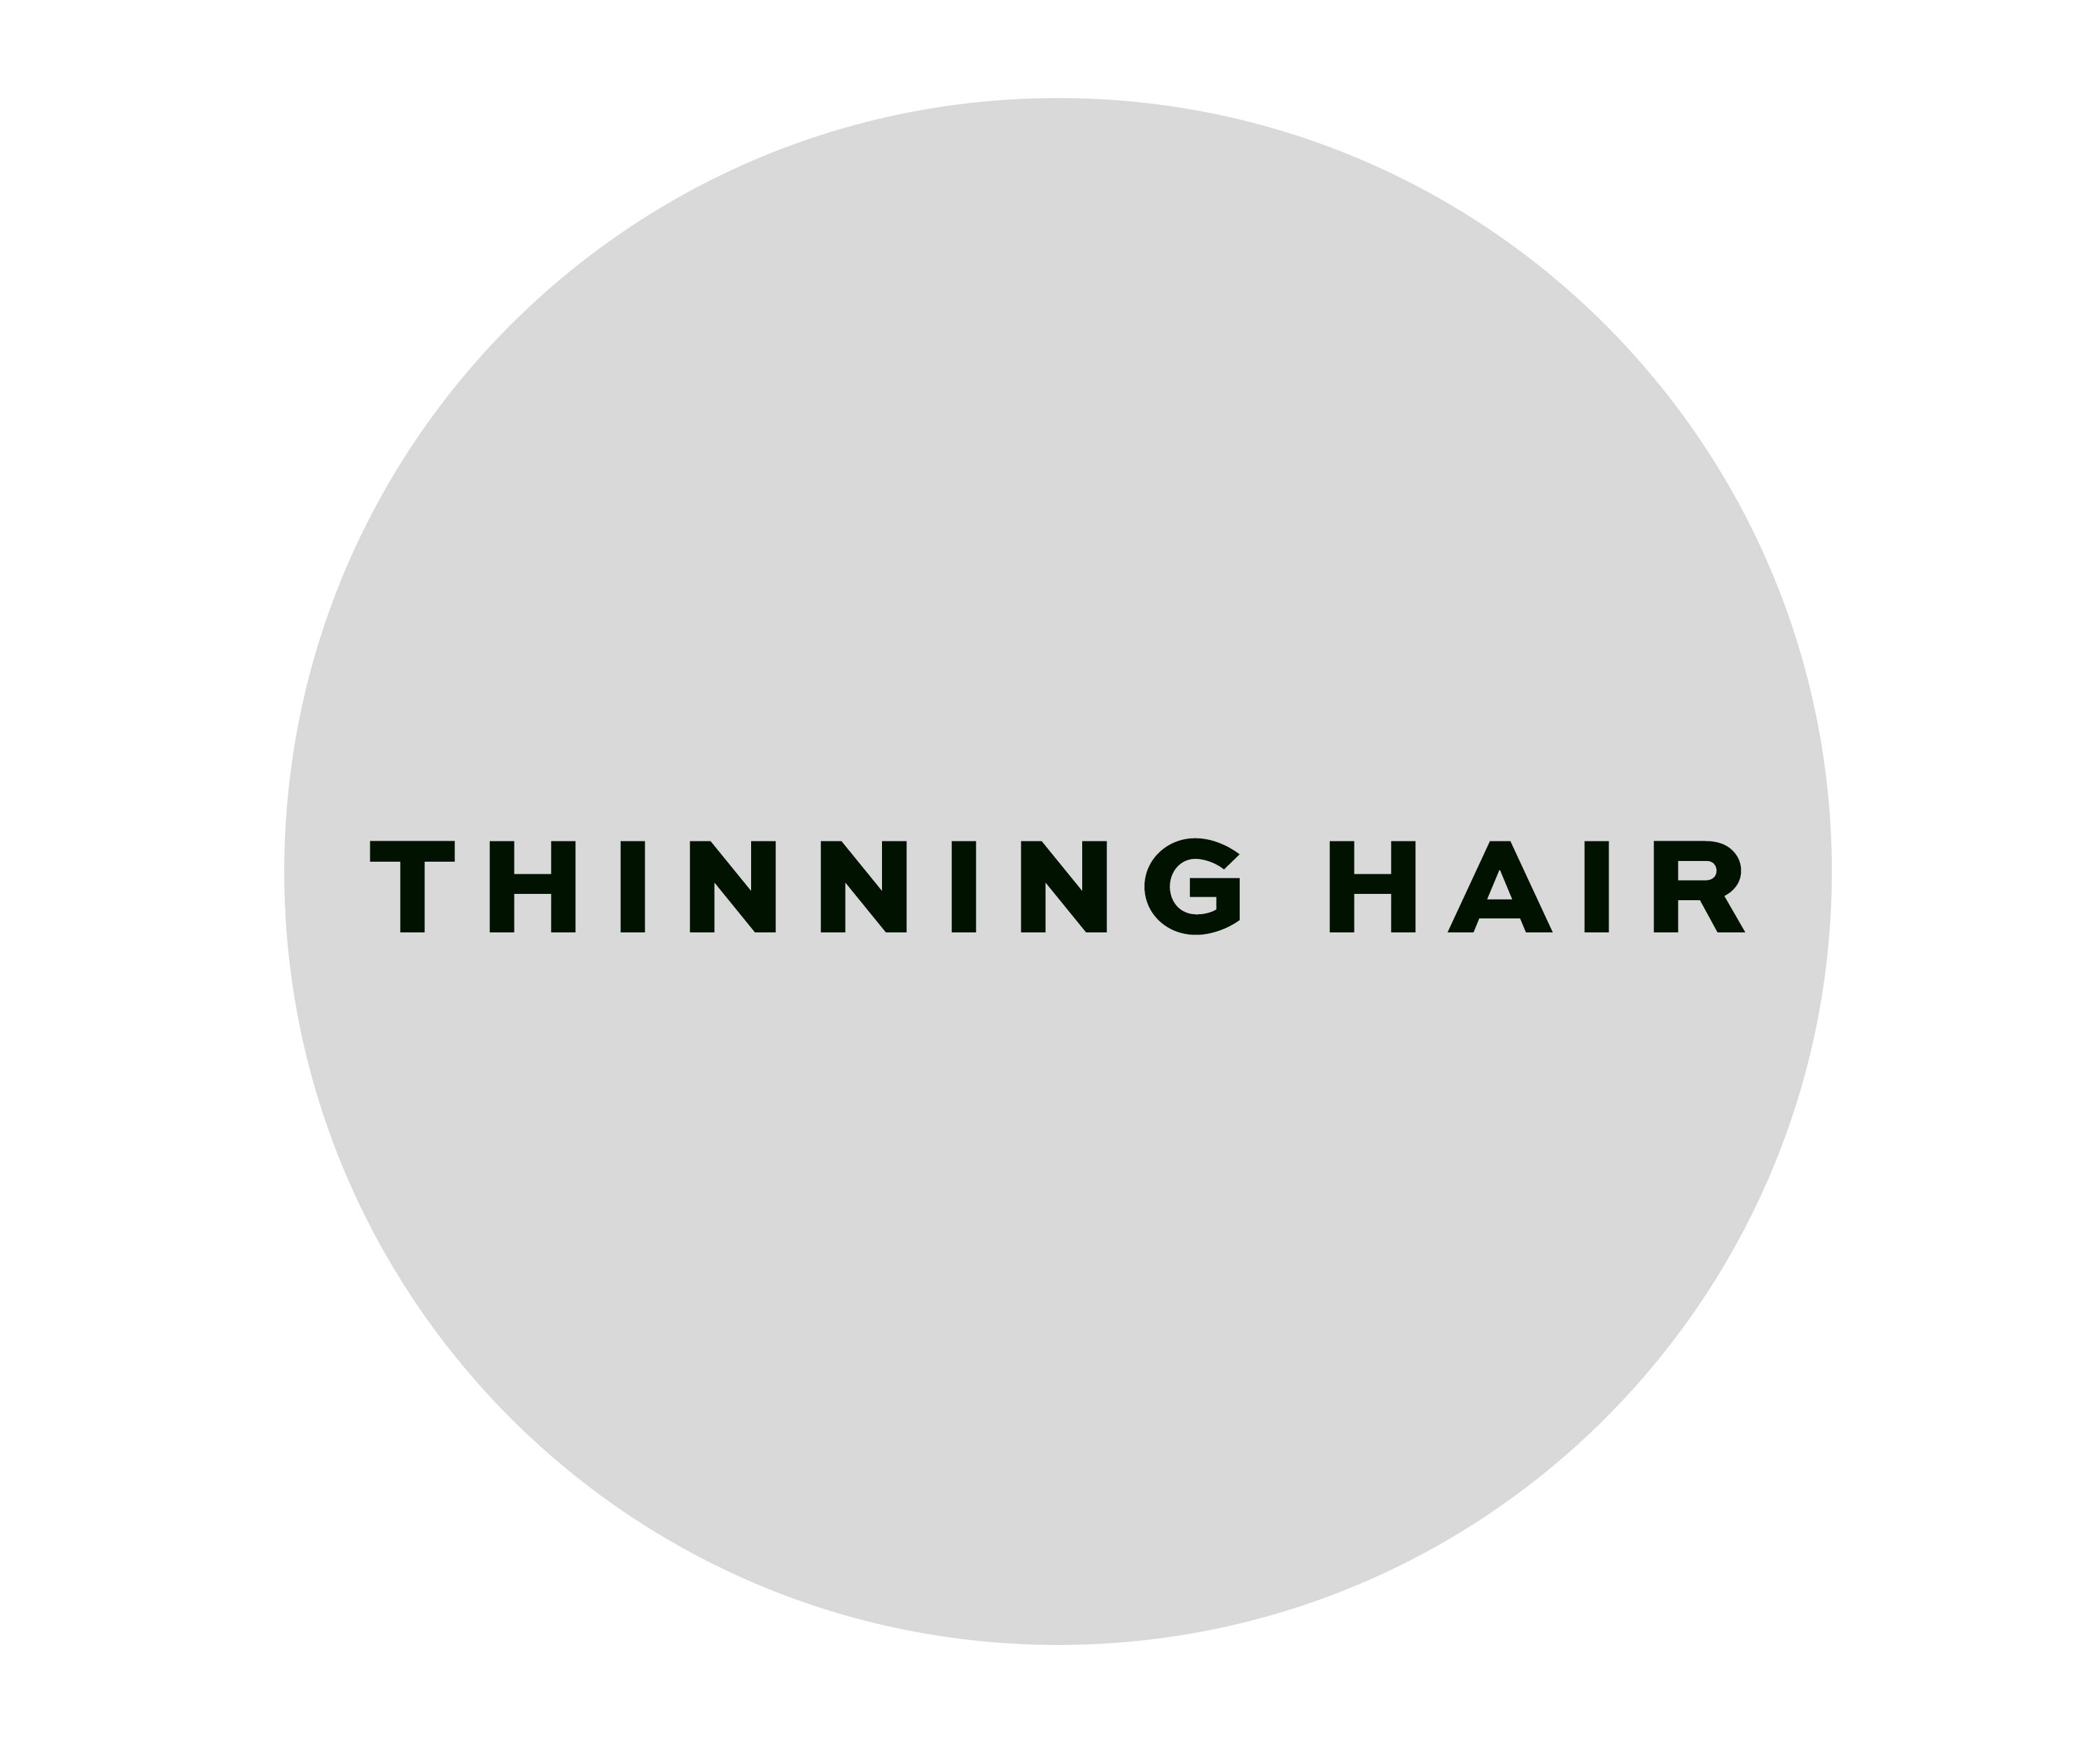 Thinning hair